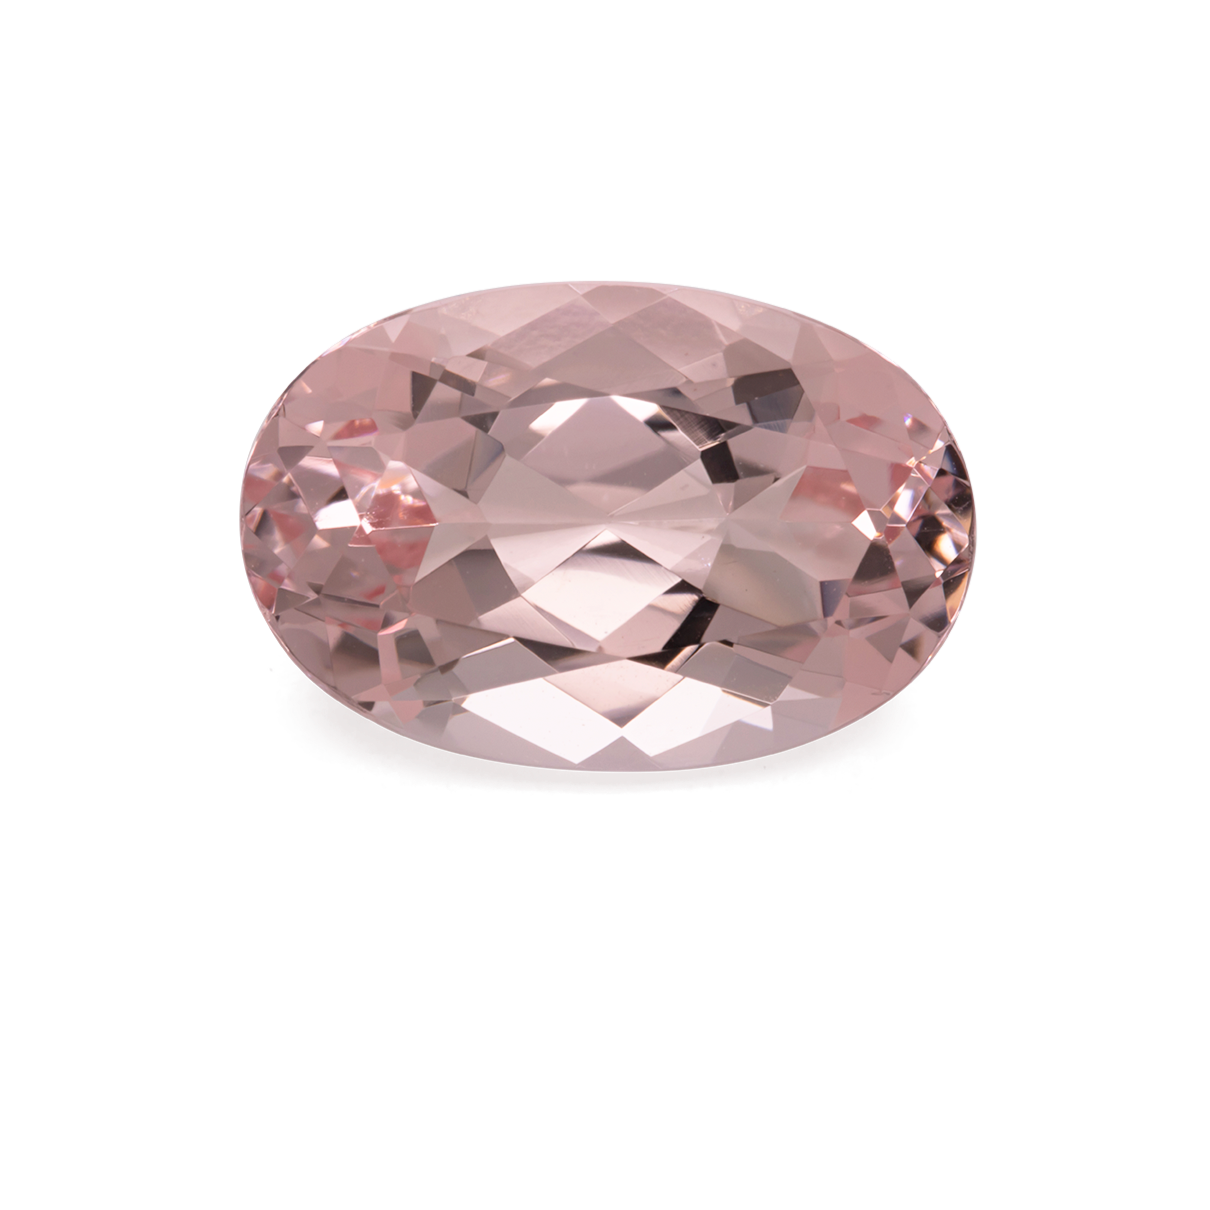 Morganit - rosa, oval, 12,2x8,1 mm, 3,22 cts, Nr. MO31008